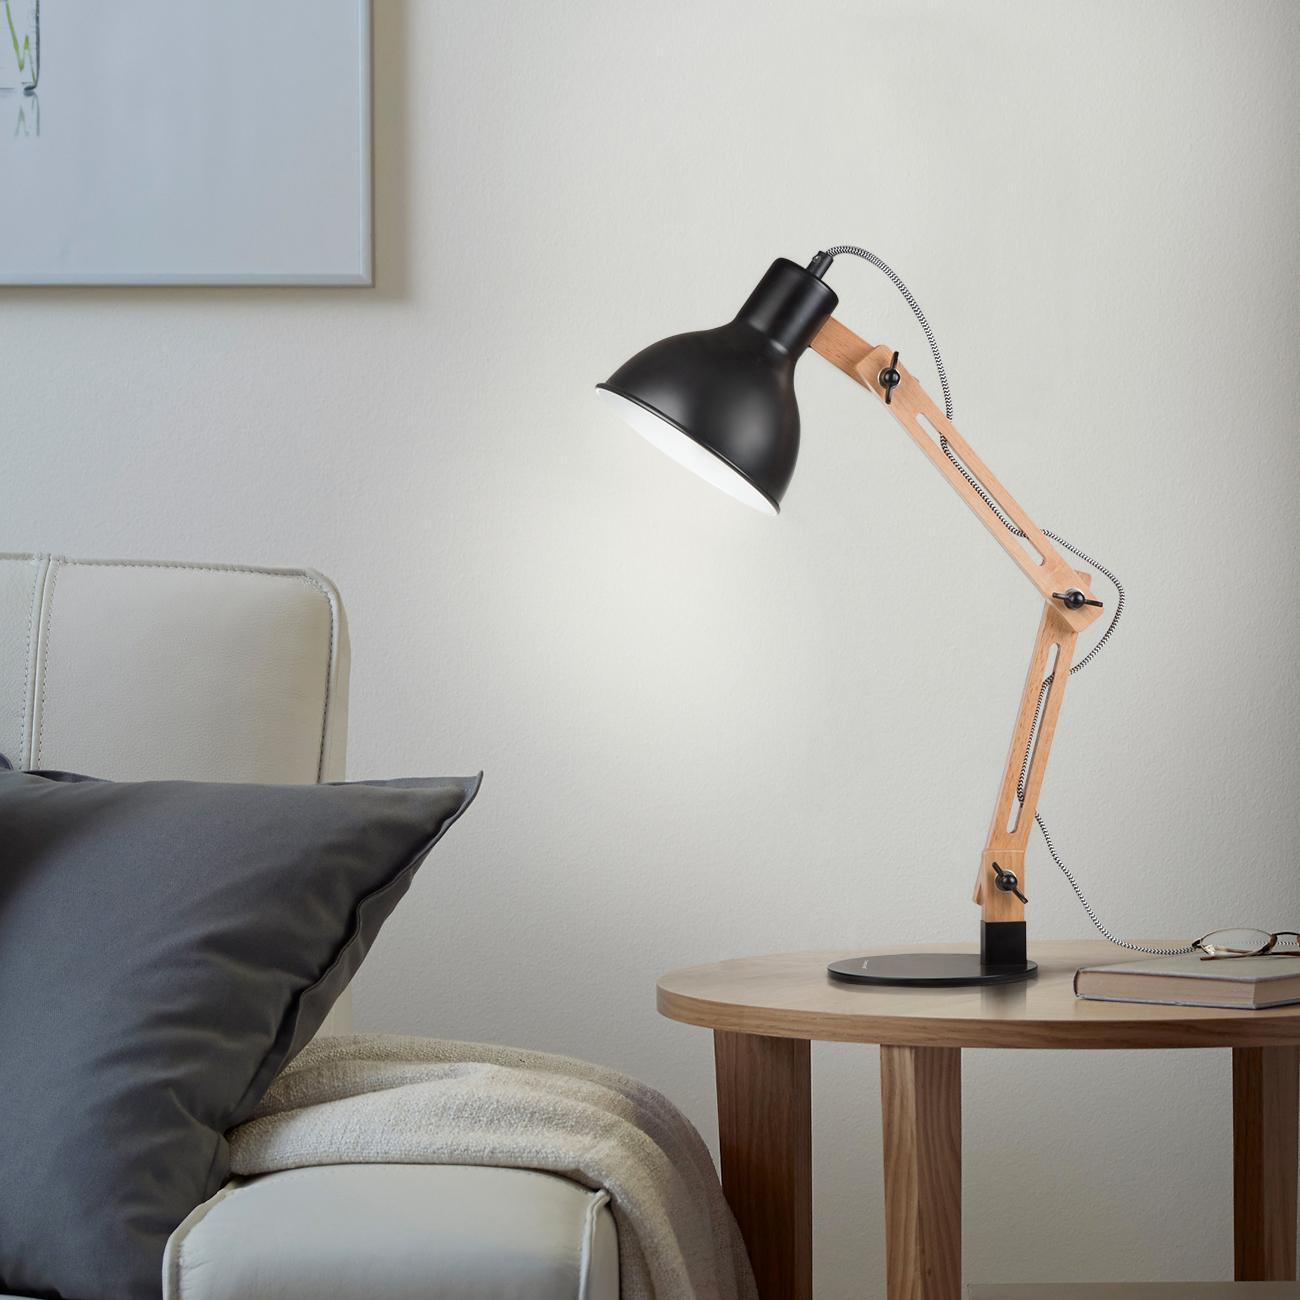 Leselampe als Wohnaccessoire #tischlampe #lampe ©F&M TECHNOLOGY GmbH